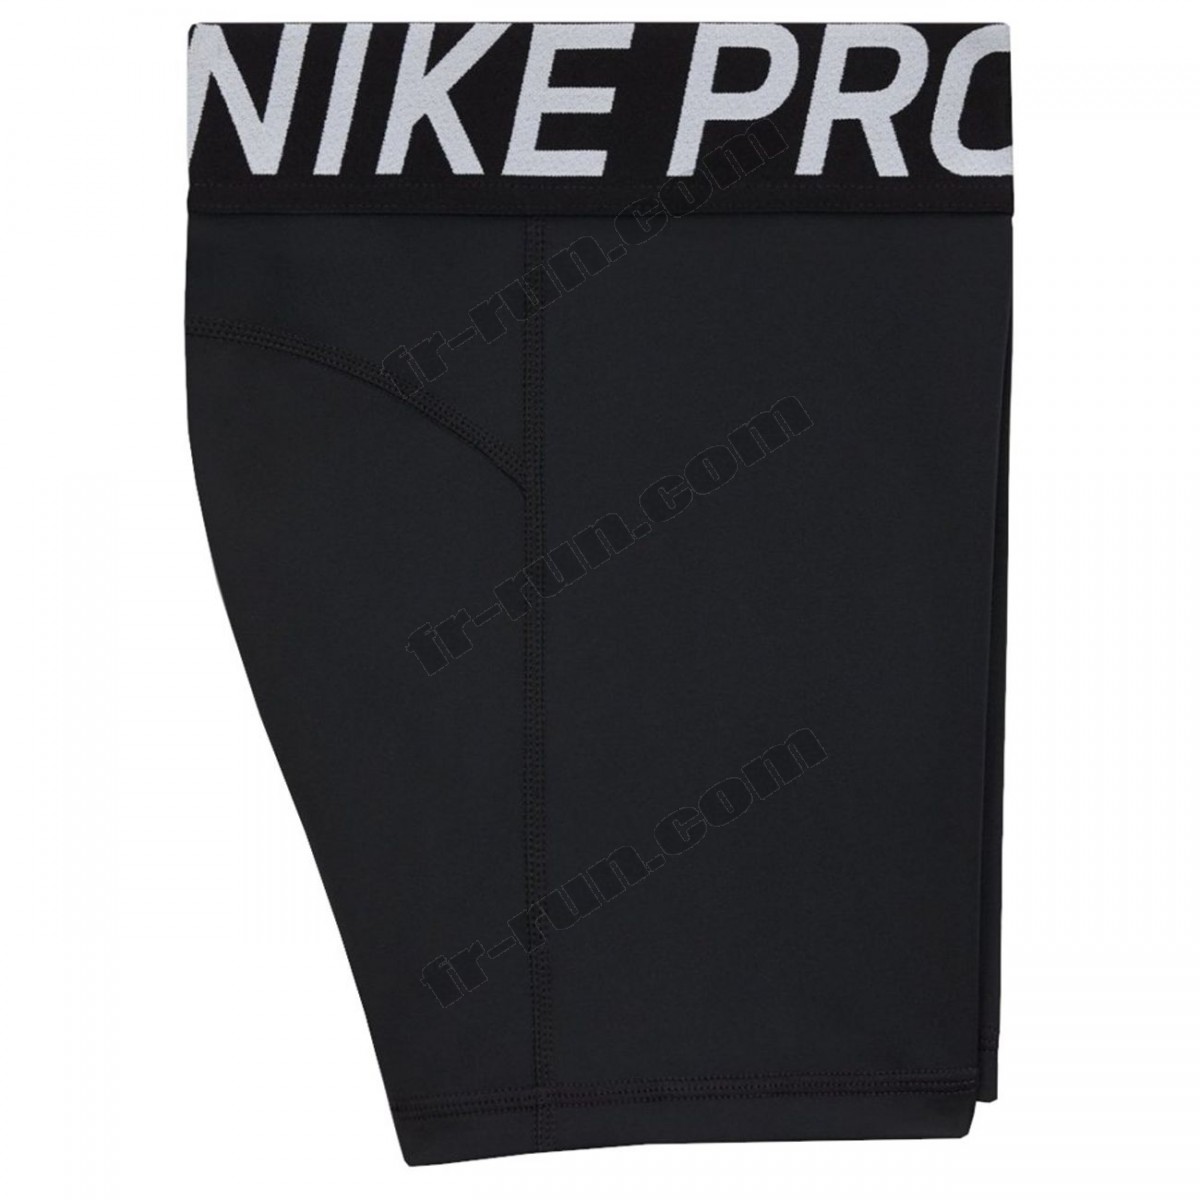 Nike/Training homme NIKE Nike Pro 3IN Drifit ◇◇◇ Pas Cher Du Tout - -7